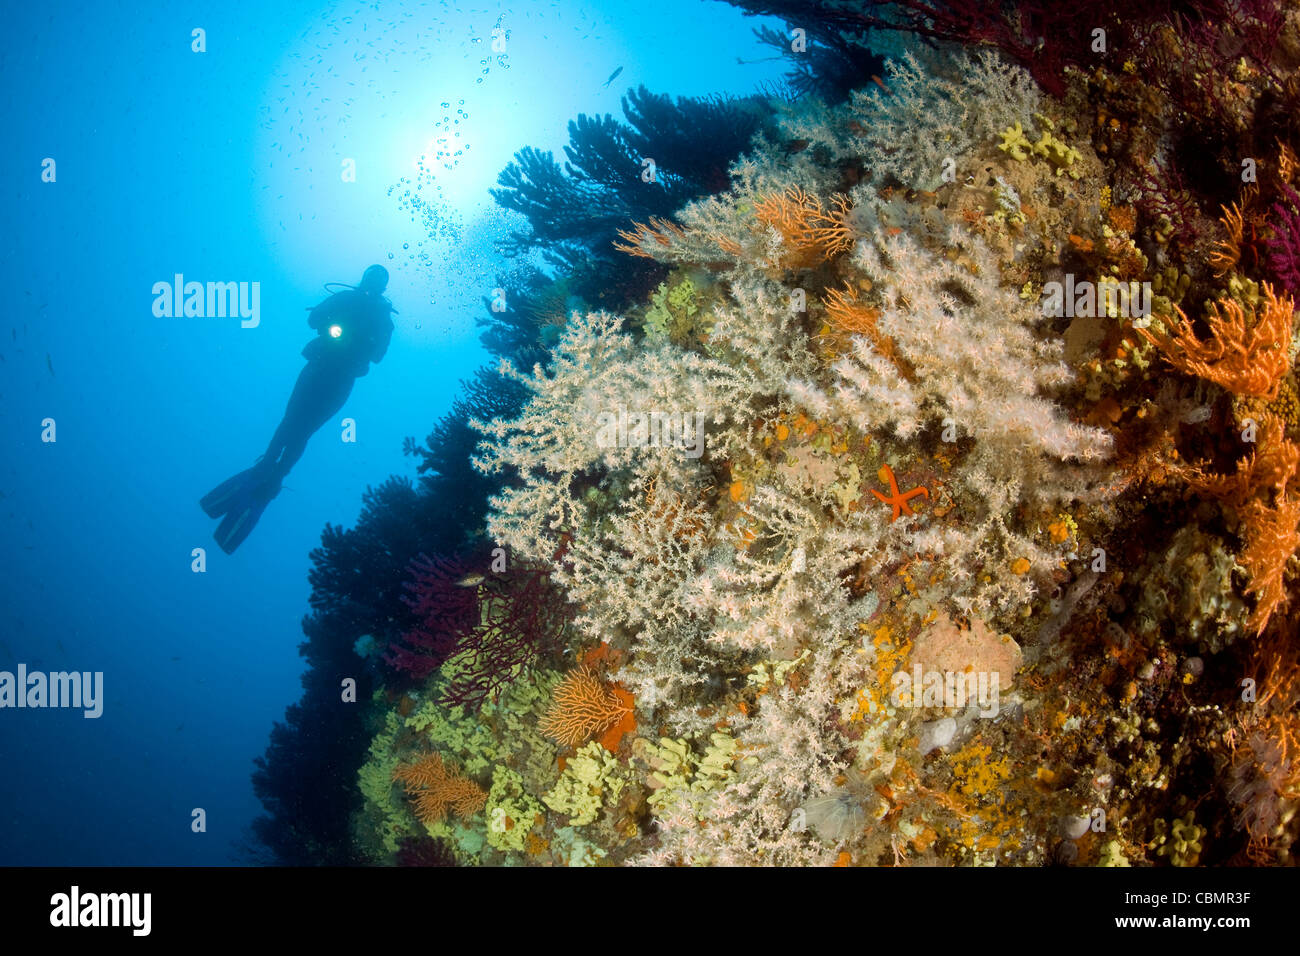 Scuba diver and Mediterranean Black Coral, Gerardia Savaglia, Ischia, Mediterranean Sea, Italy Stock Photo